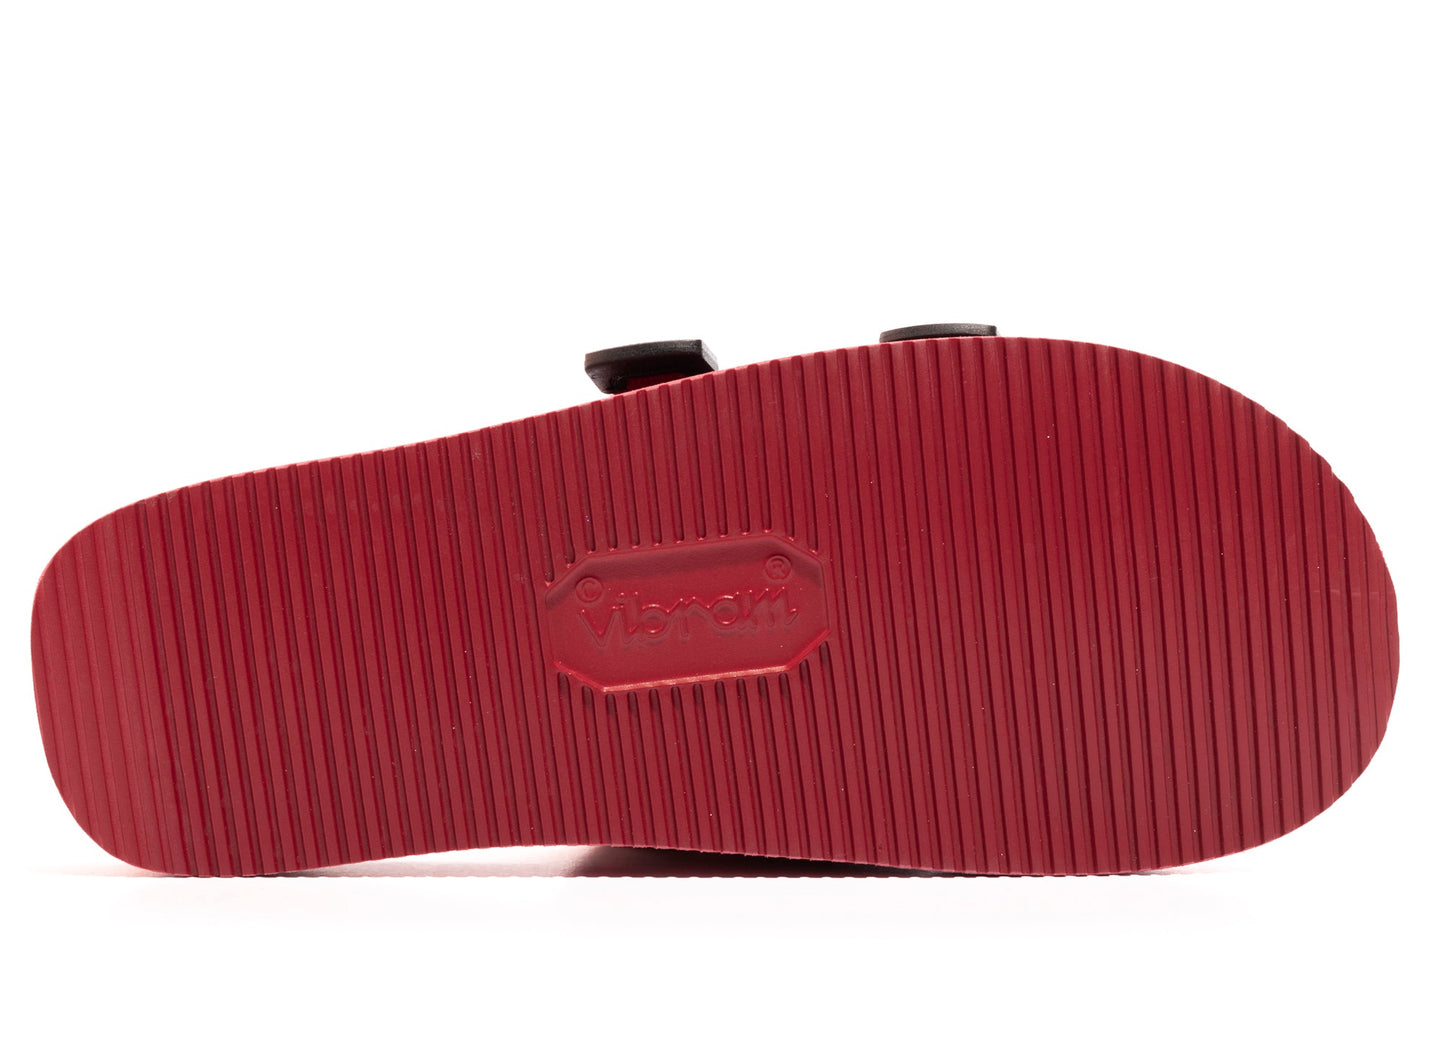 Suicoke Moto-VS Sandals in Red